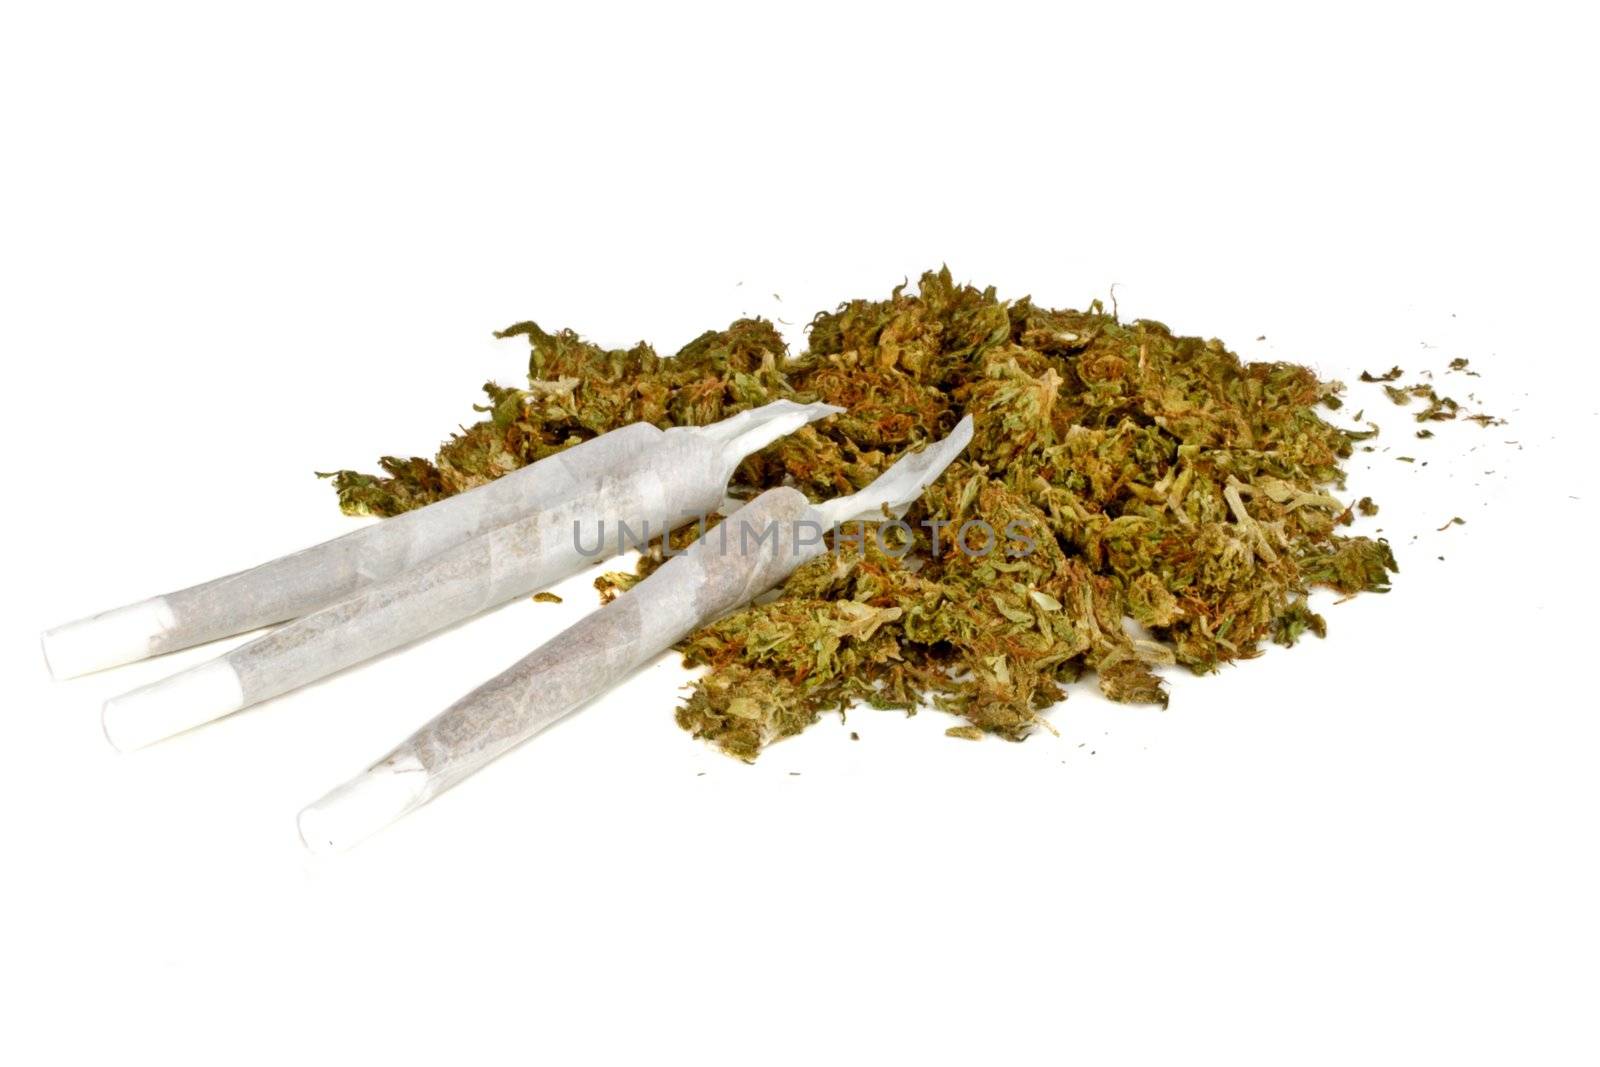 Marihuana joints with marihuana